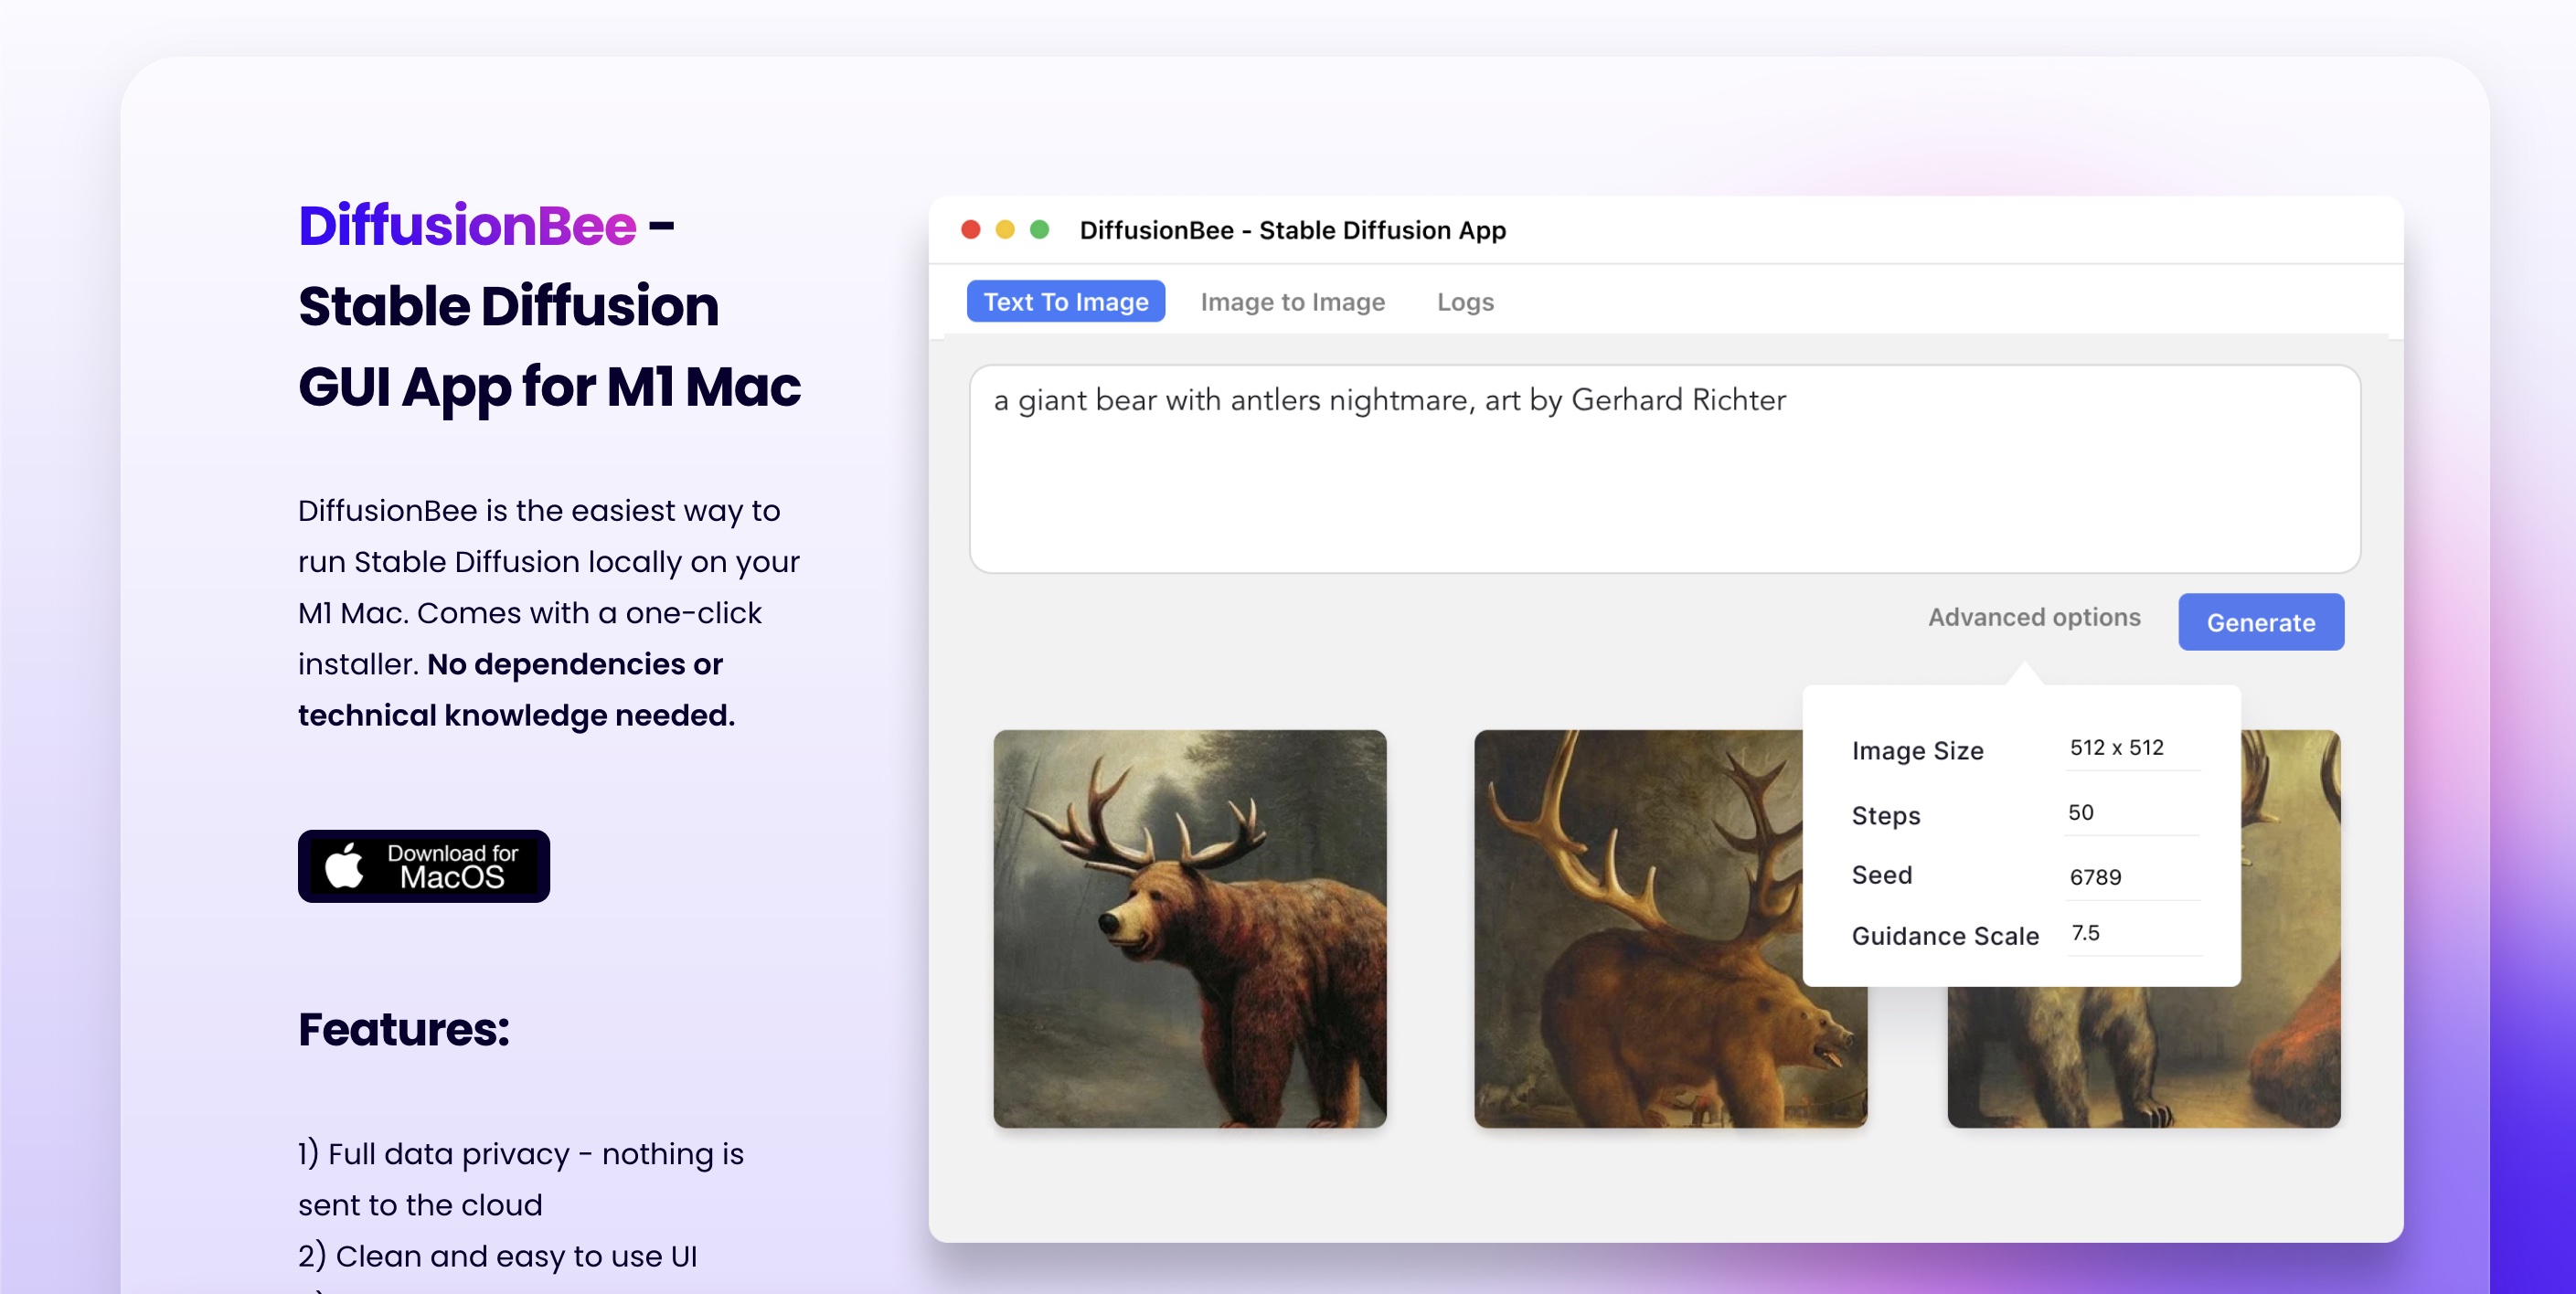 DiffusionBee - Стабильная диффузия пользователя -интерфейс для пользователей Mac